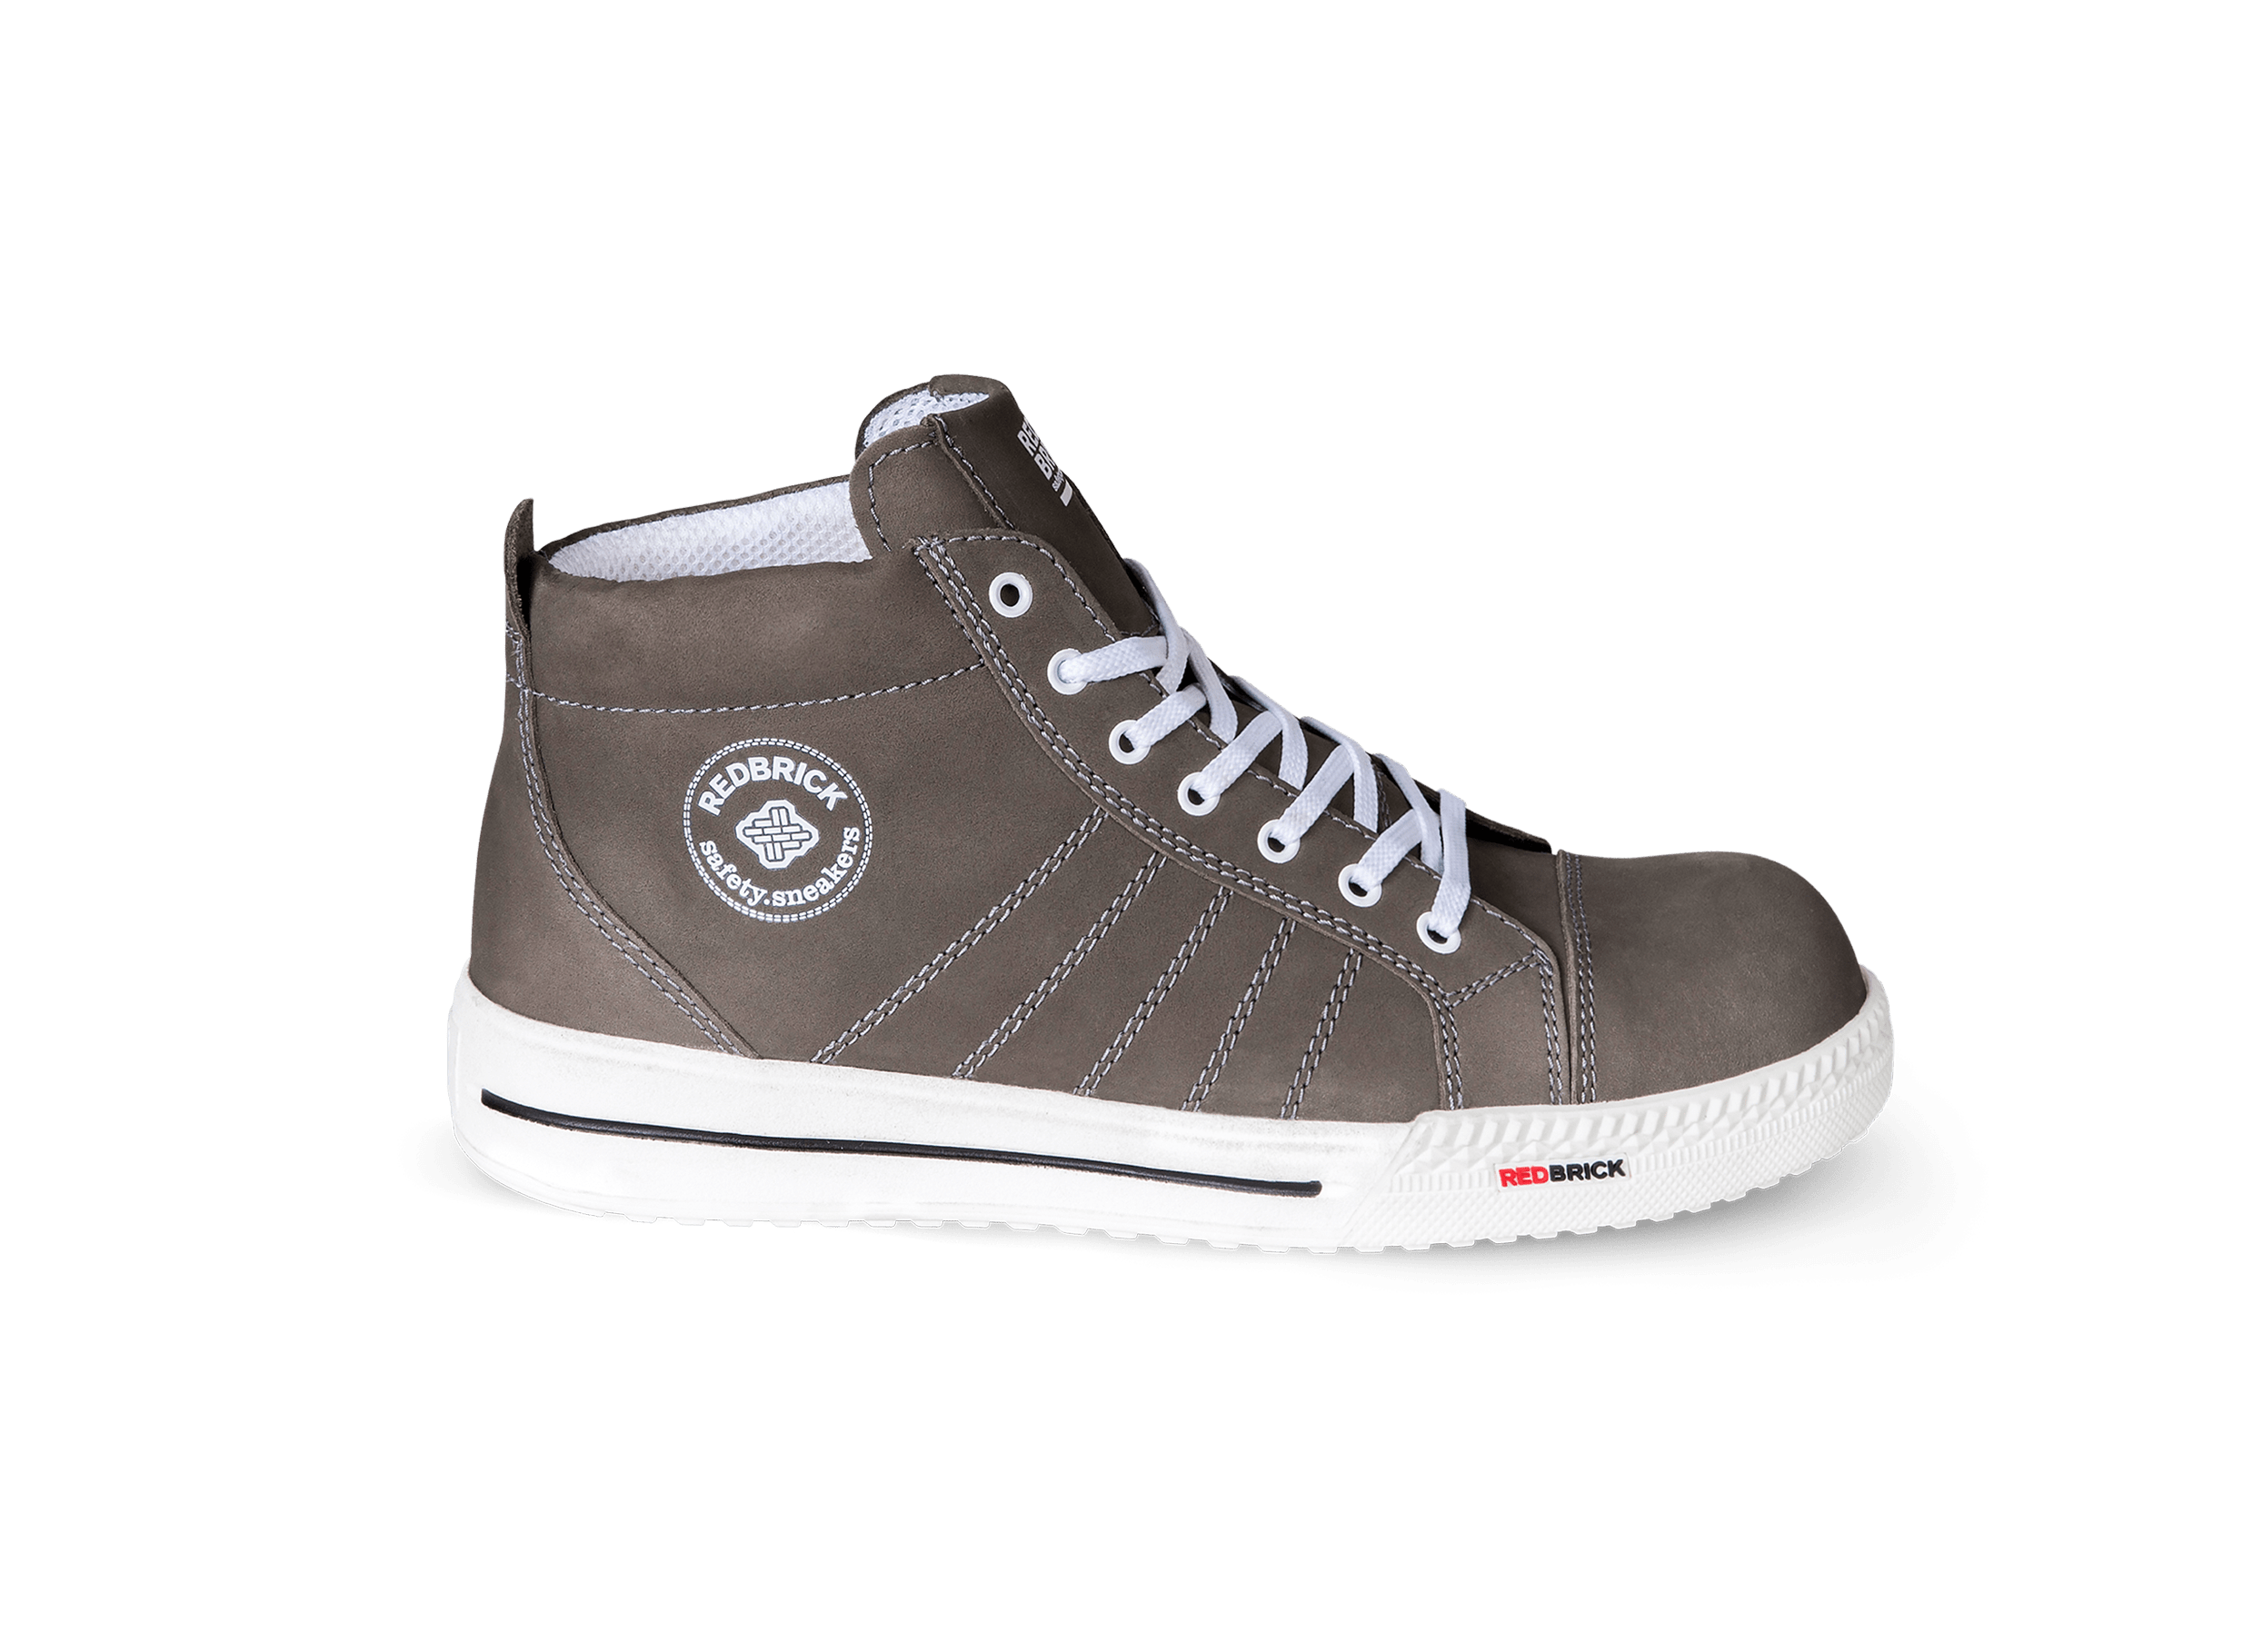 les Interactie Saga Redbrick Jesper S3 | Redbrick Safety Sneakers - NL